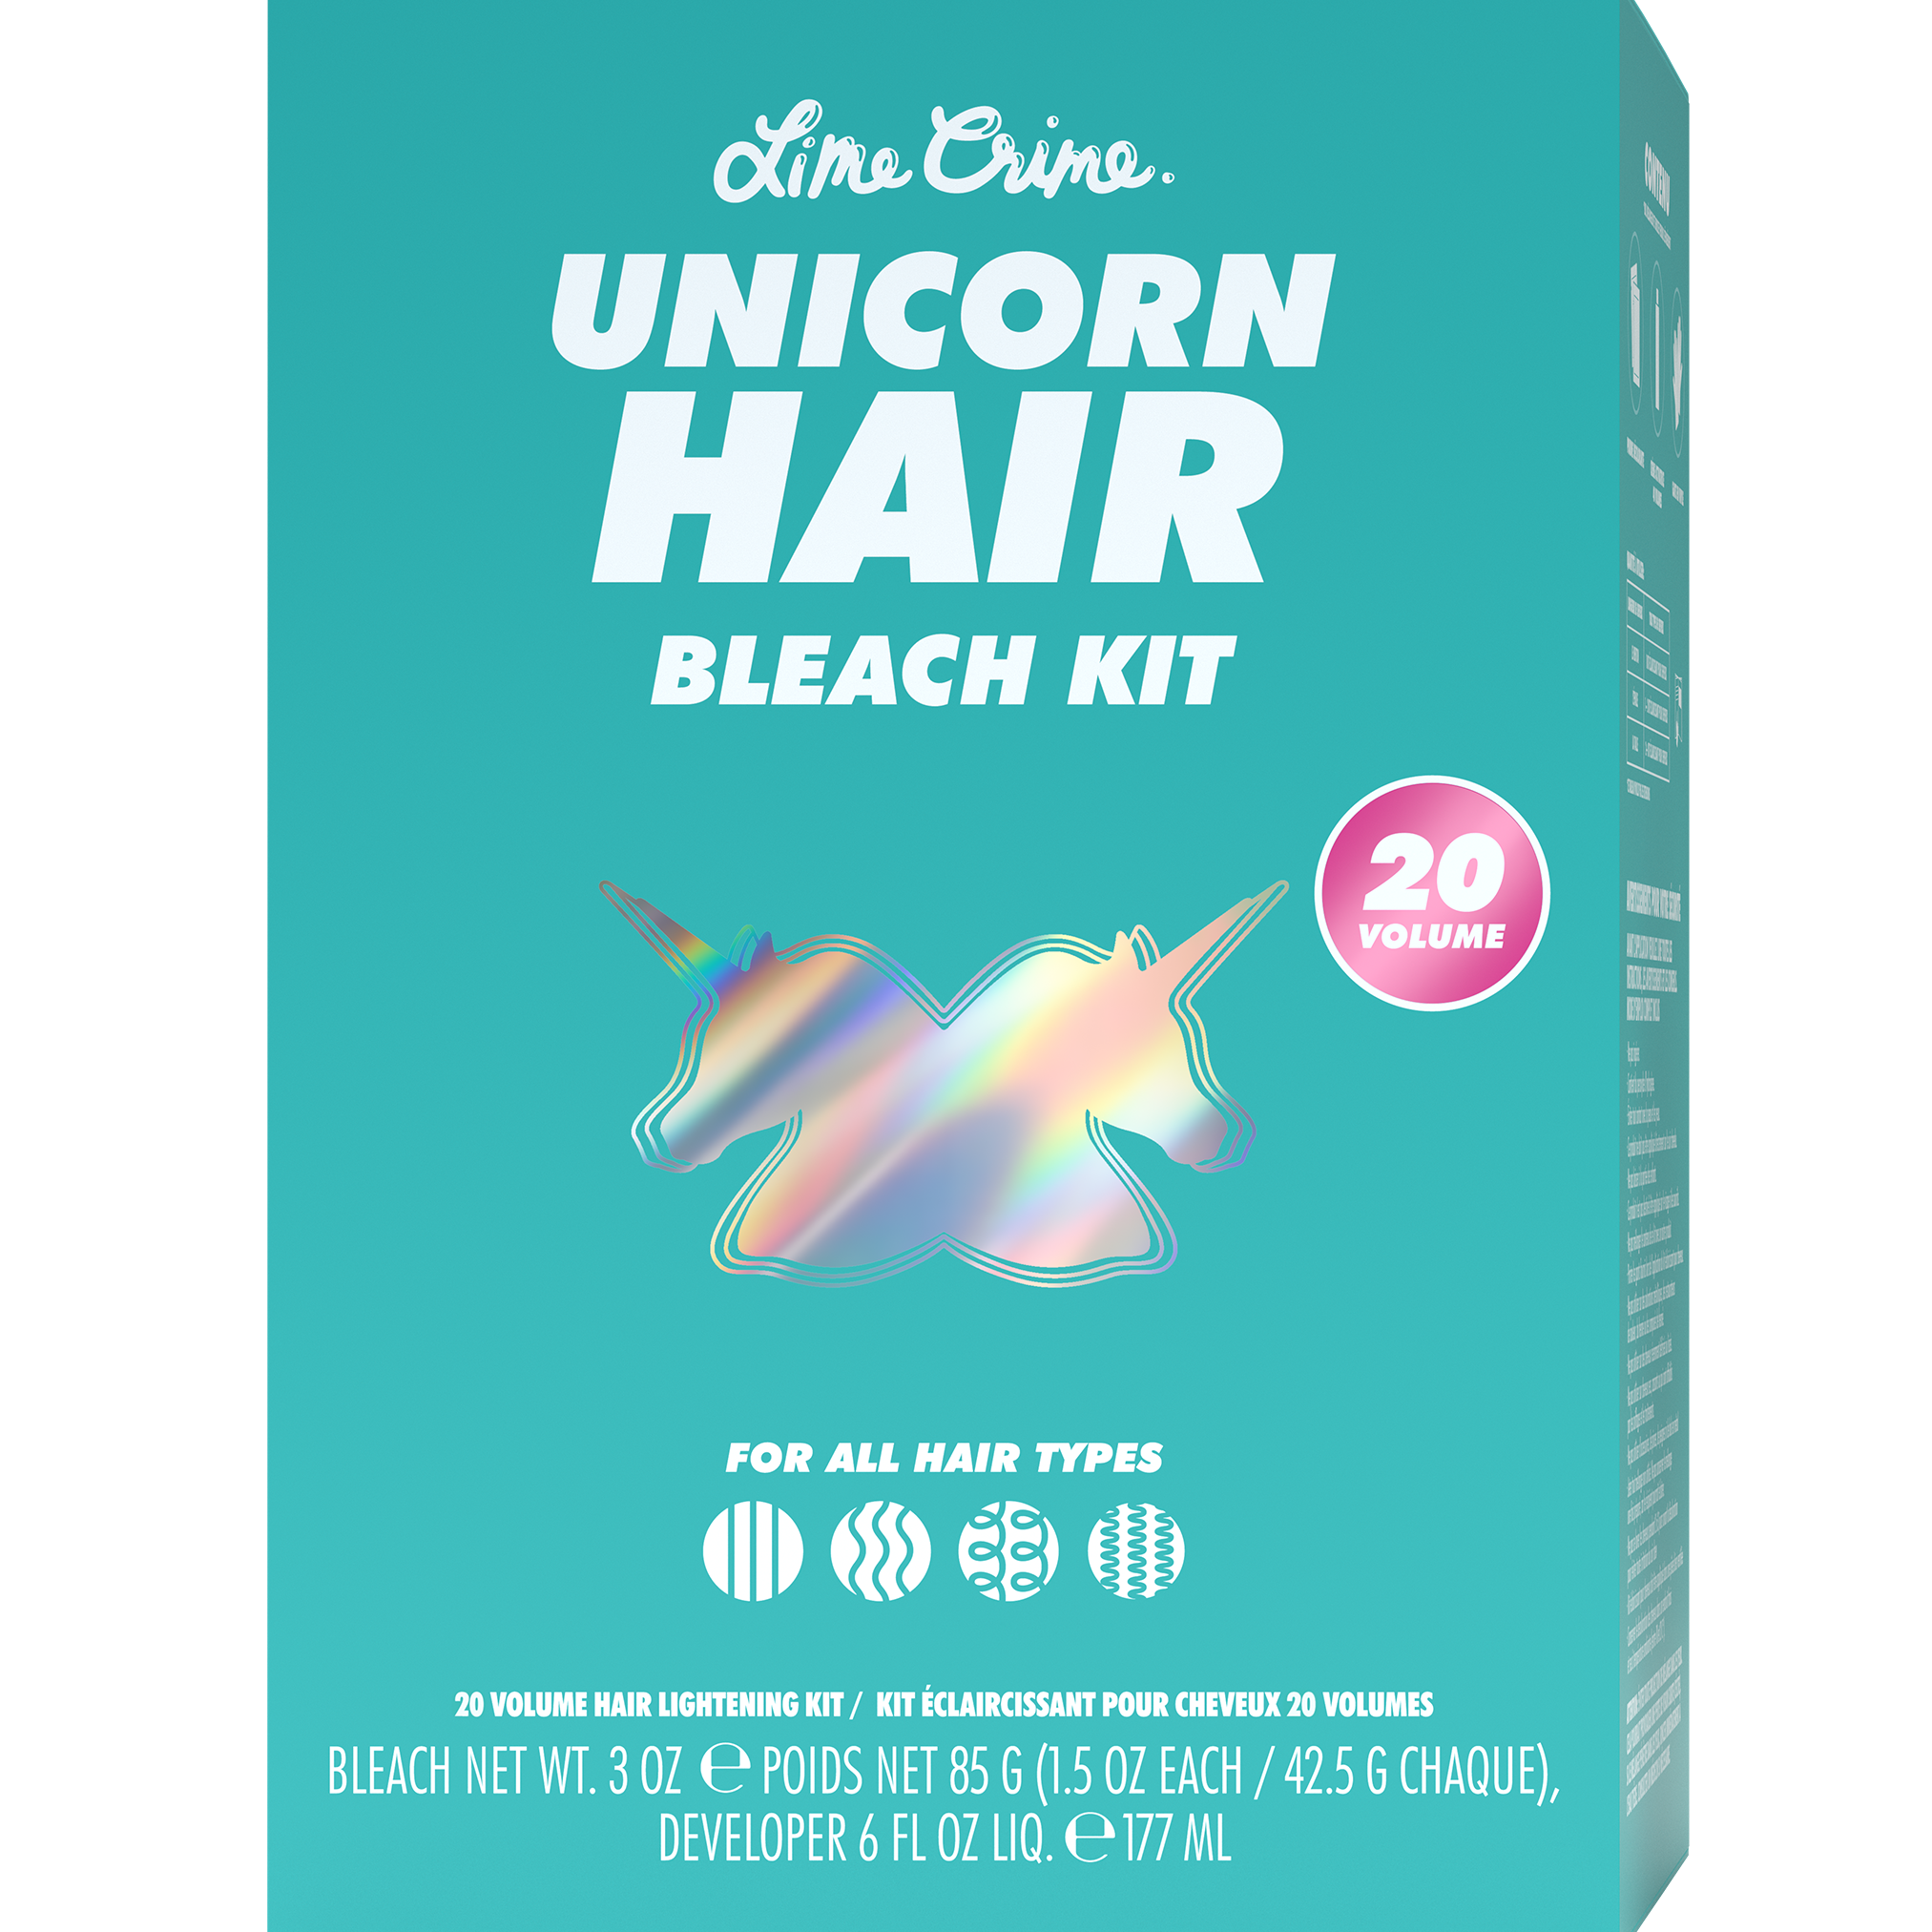 Unicorn Hair Bleach Kit variant:20 Volume Bleach Party